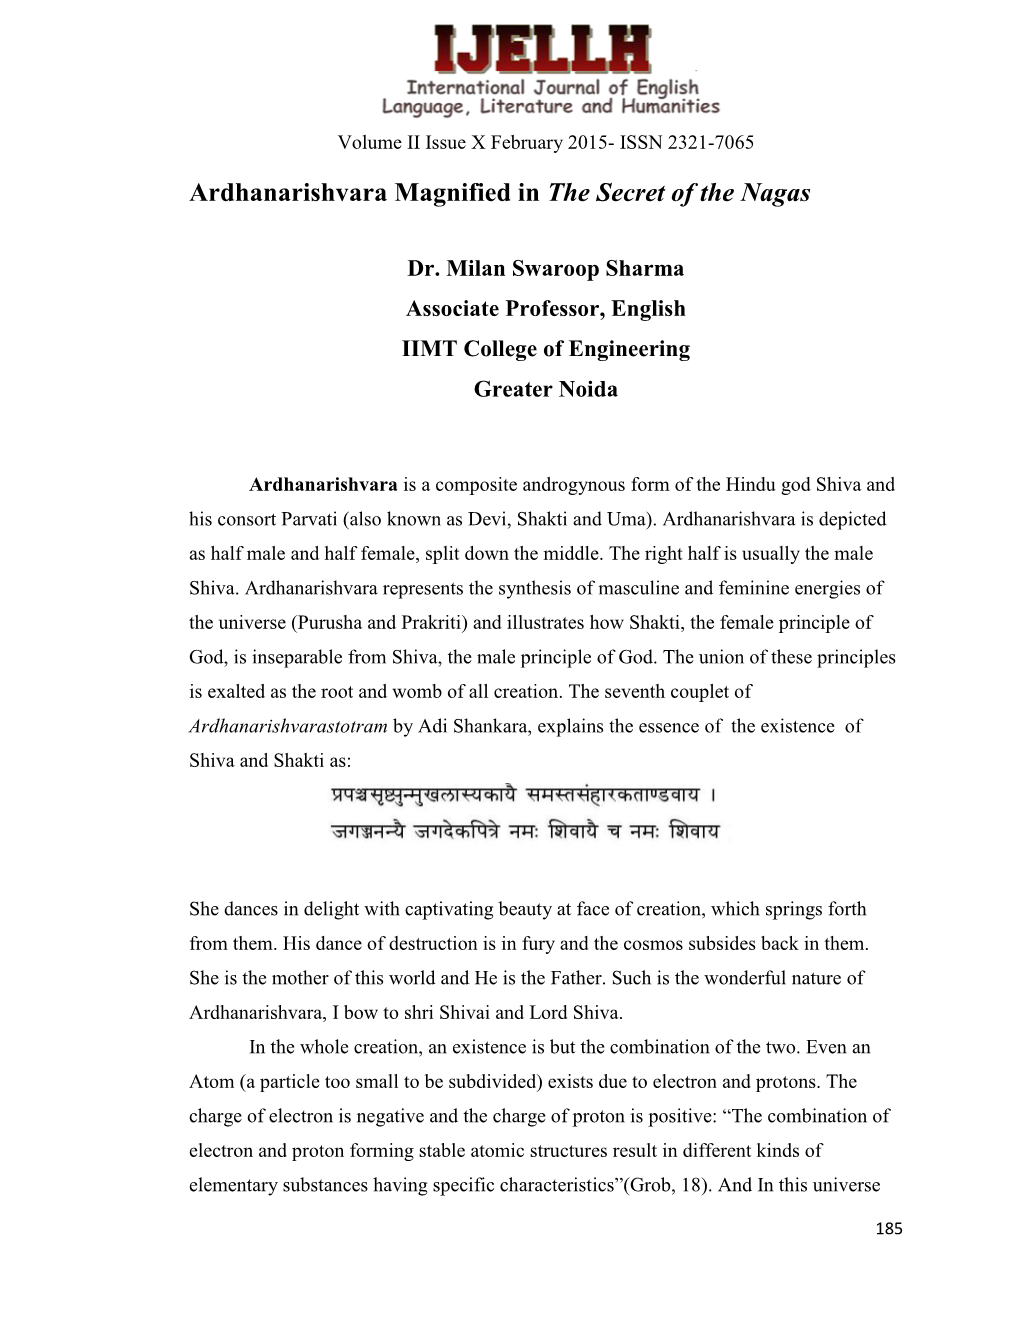 Ardhanarishvara Magnified in the Secret of the Nagas